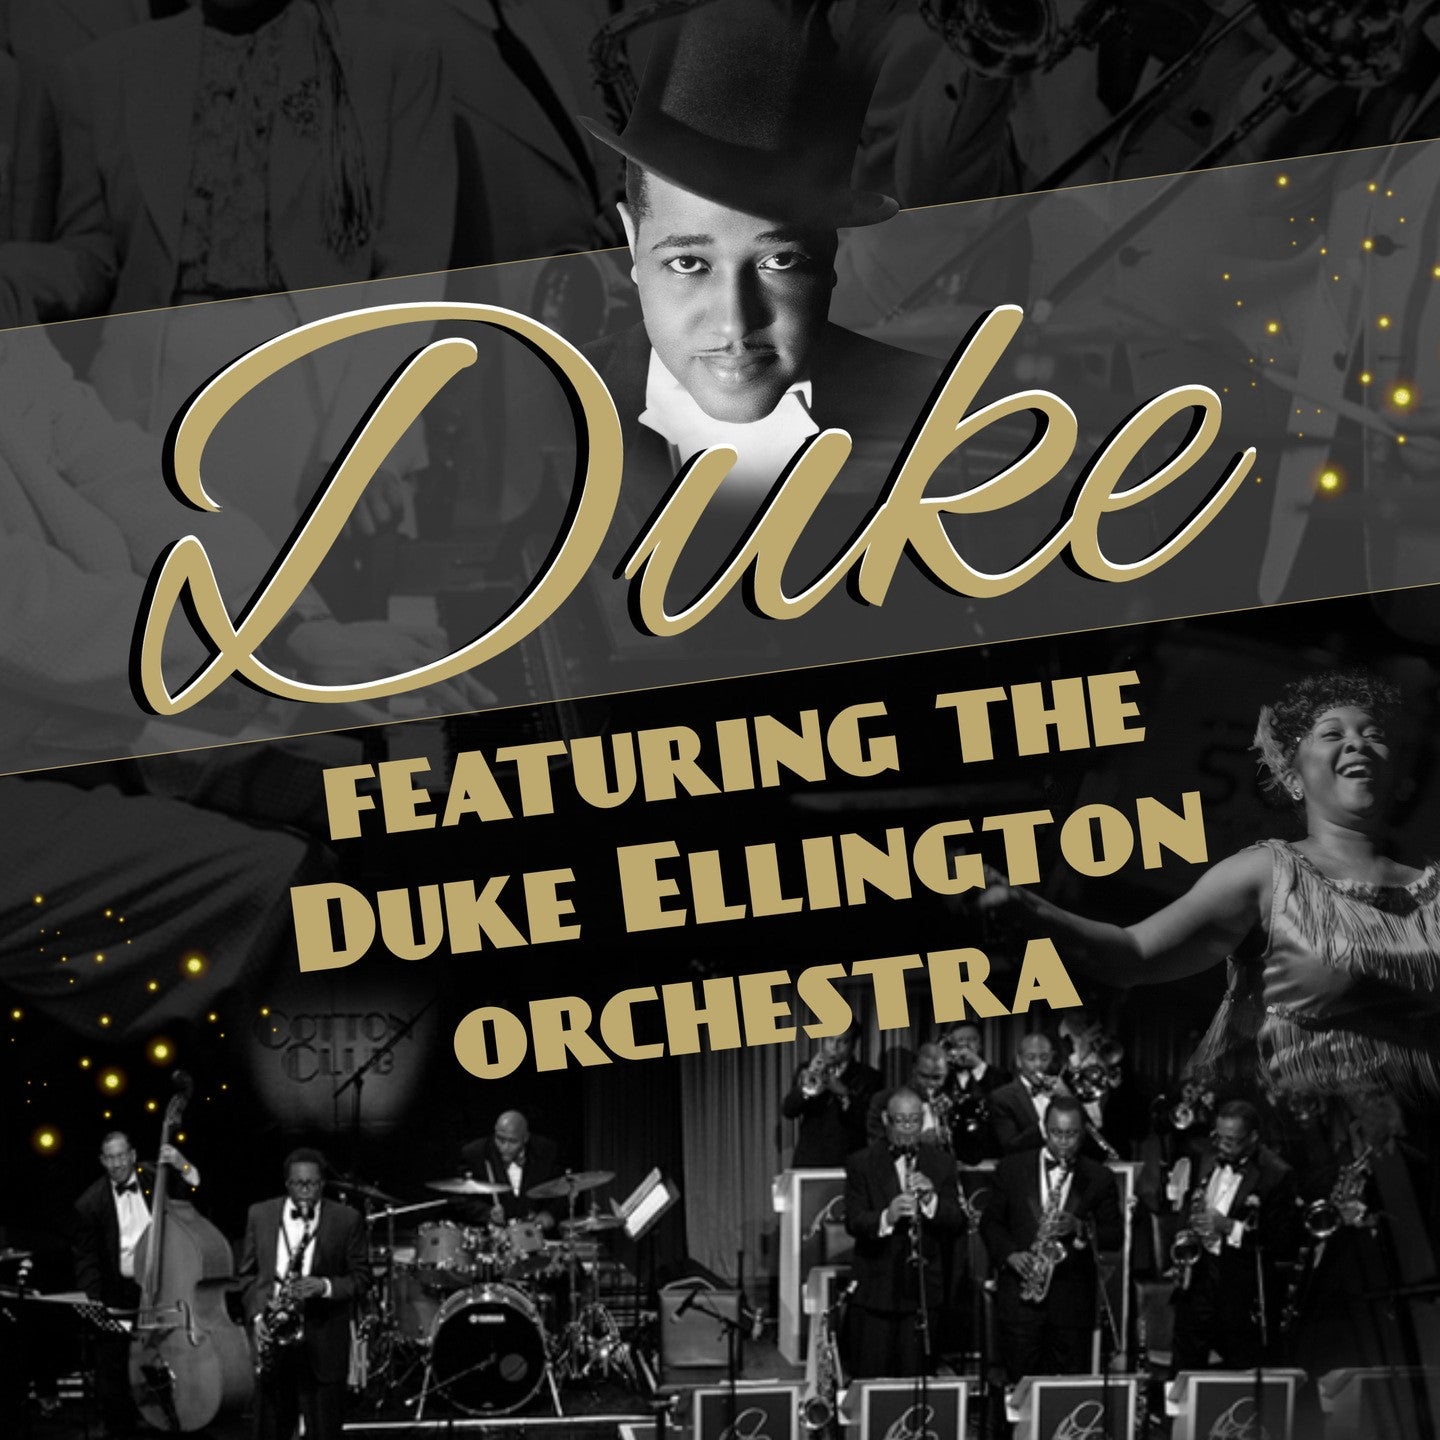 The Duke Ellington Orchestra